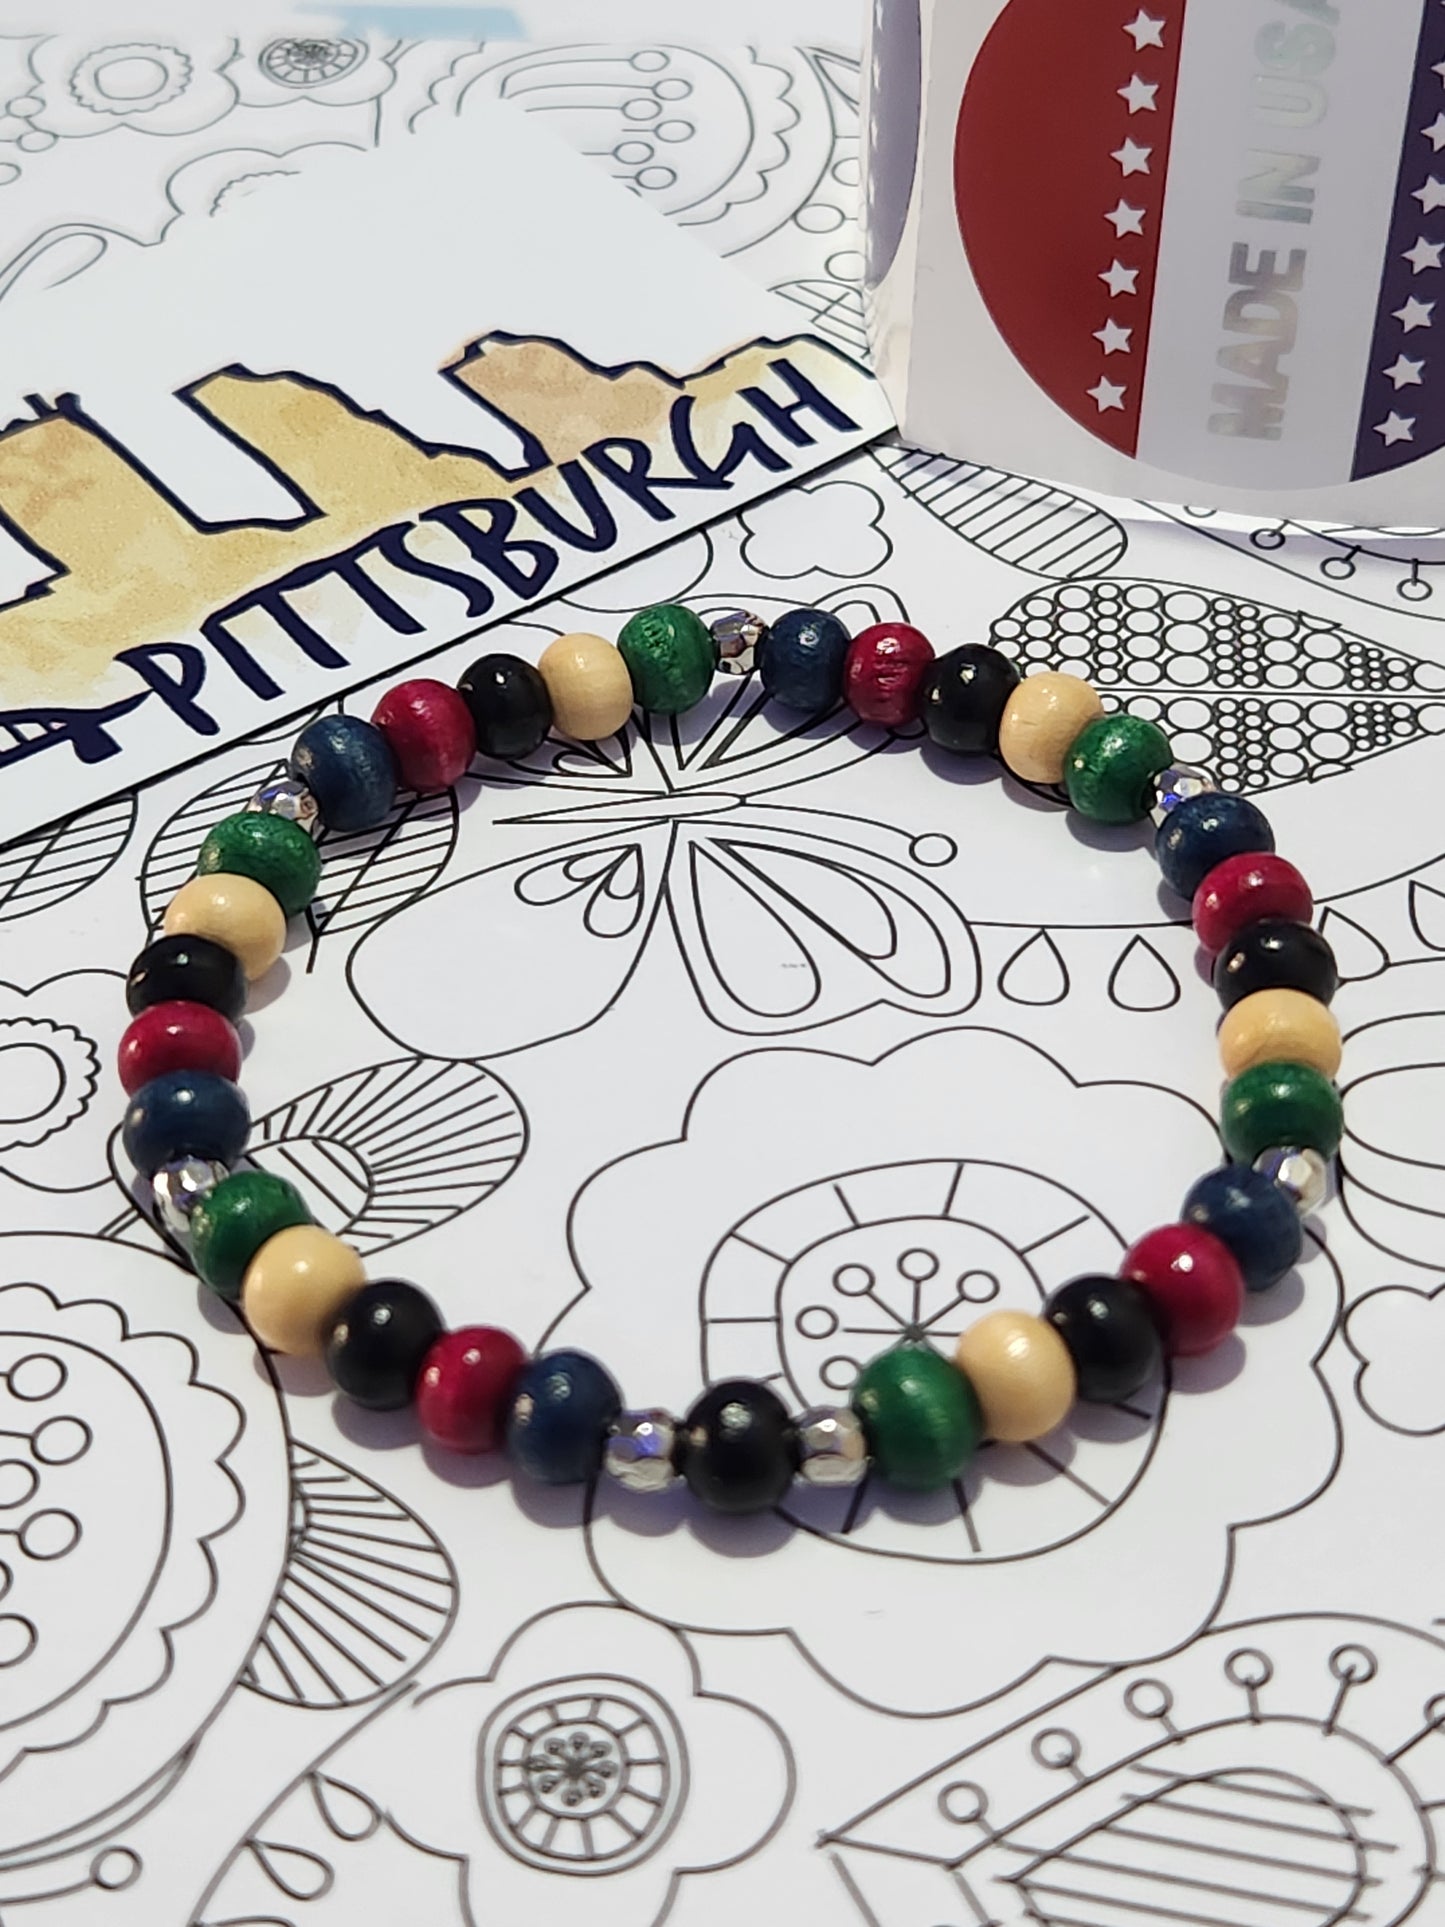 Multicolor Wooden Bracelet - 6mm beads